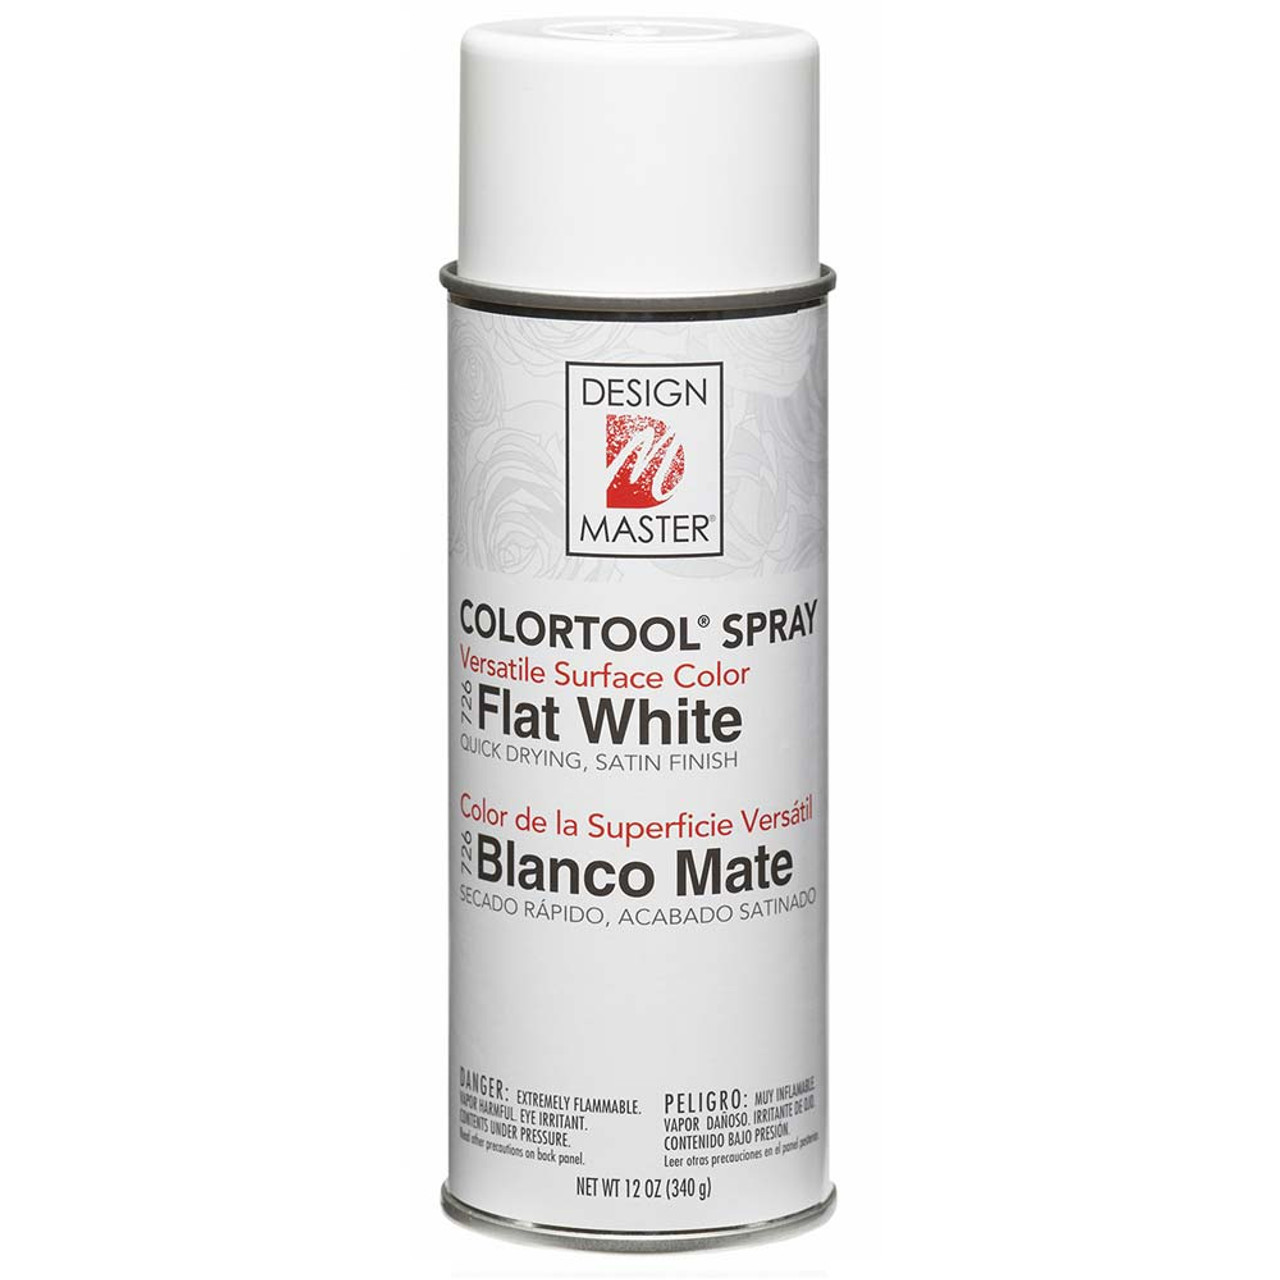 Design Master Colortool Spray Paint, Flat White - 12 fl oz can